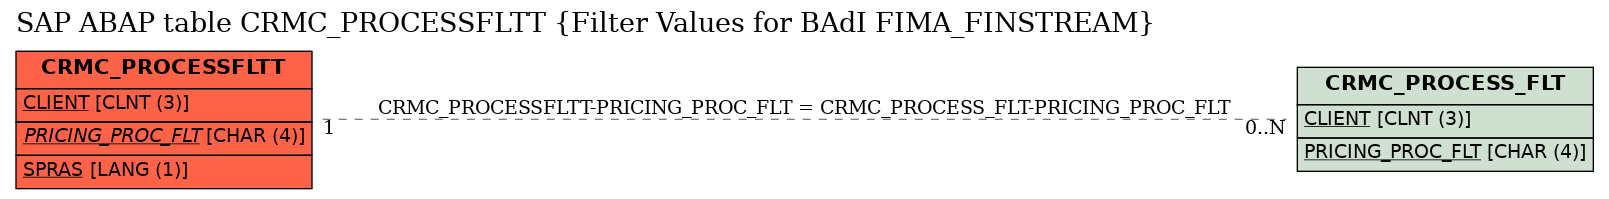 E-R Diagram for table CRMC_PROCESSFLTT (Filter Values for BAdI FIMA_FINSTREAM)